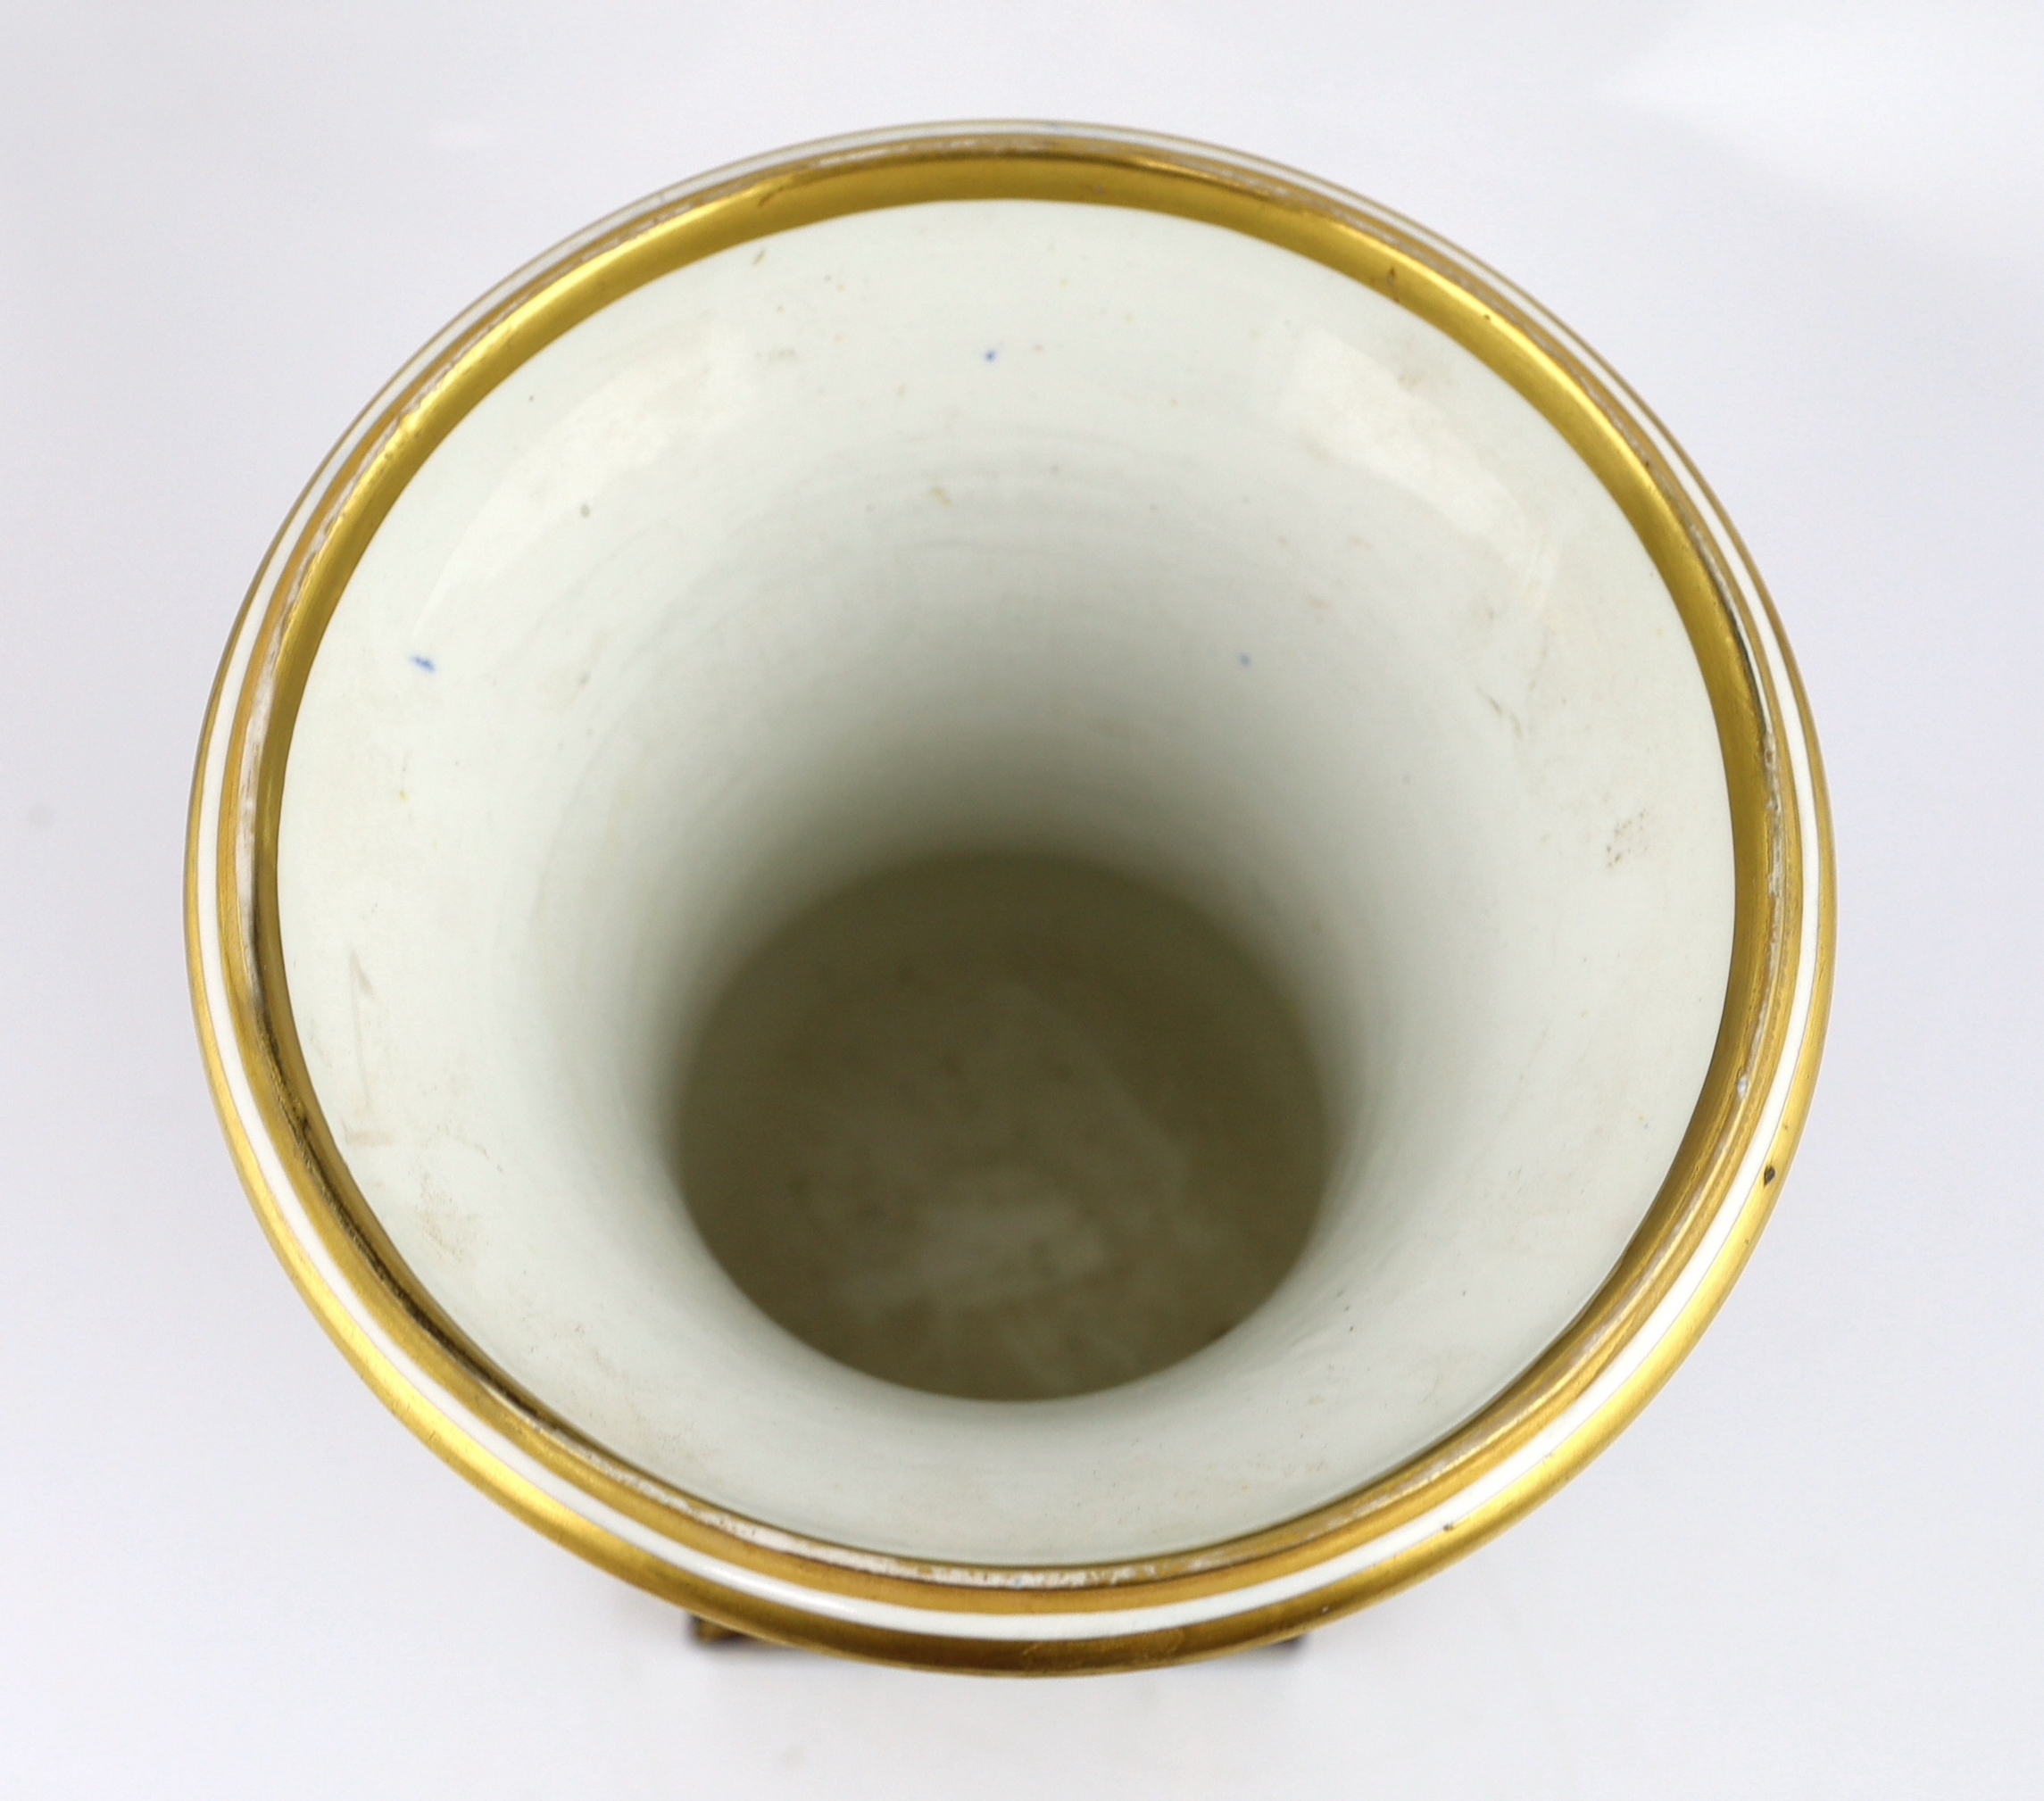 An unusual English porcelain campana vase, possibly Coalport, c.1825